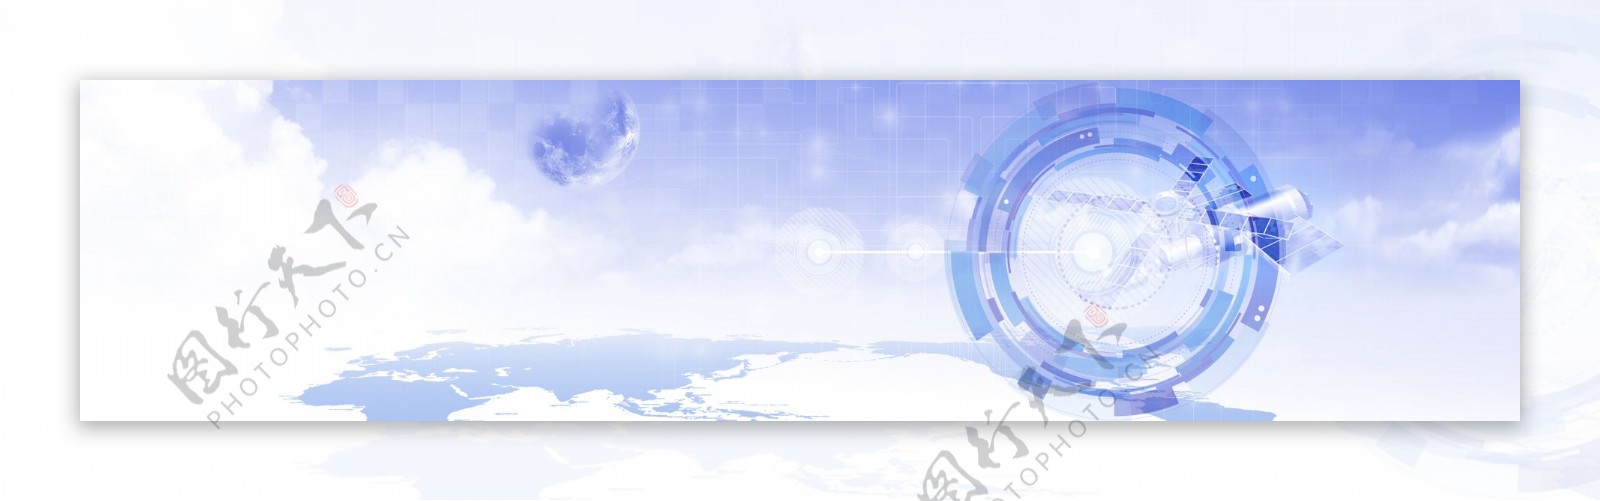 蓝色科技天空banner背景